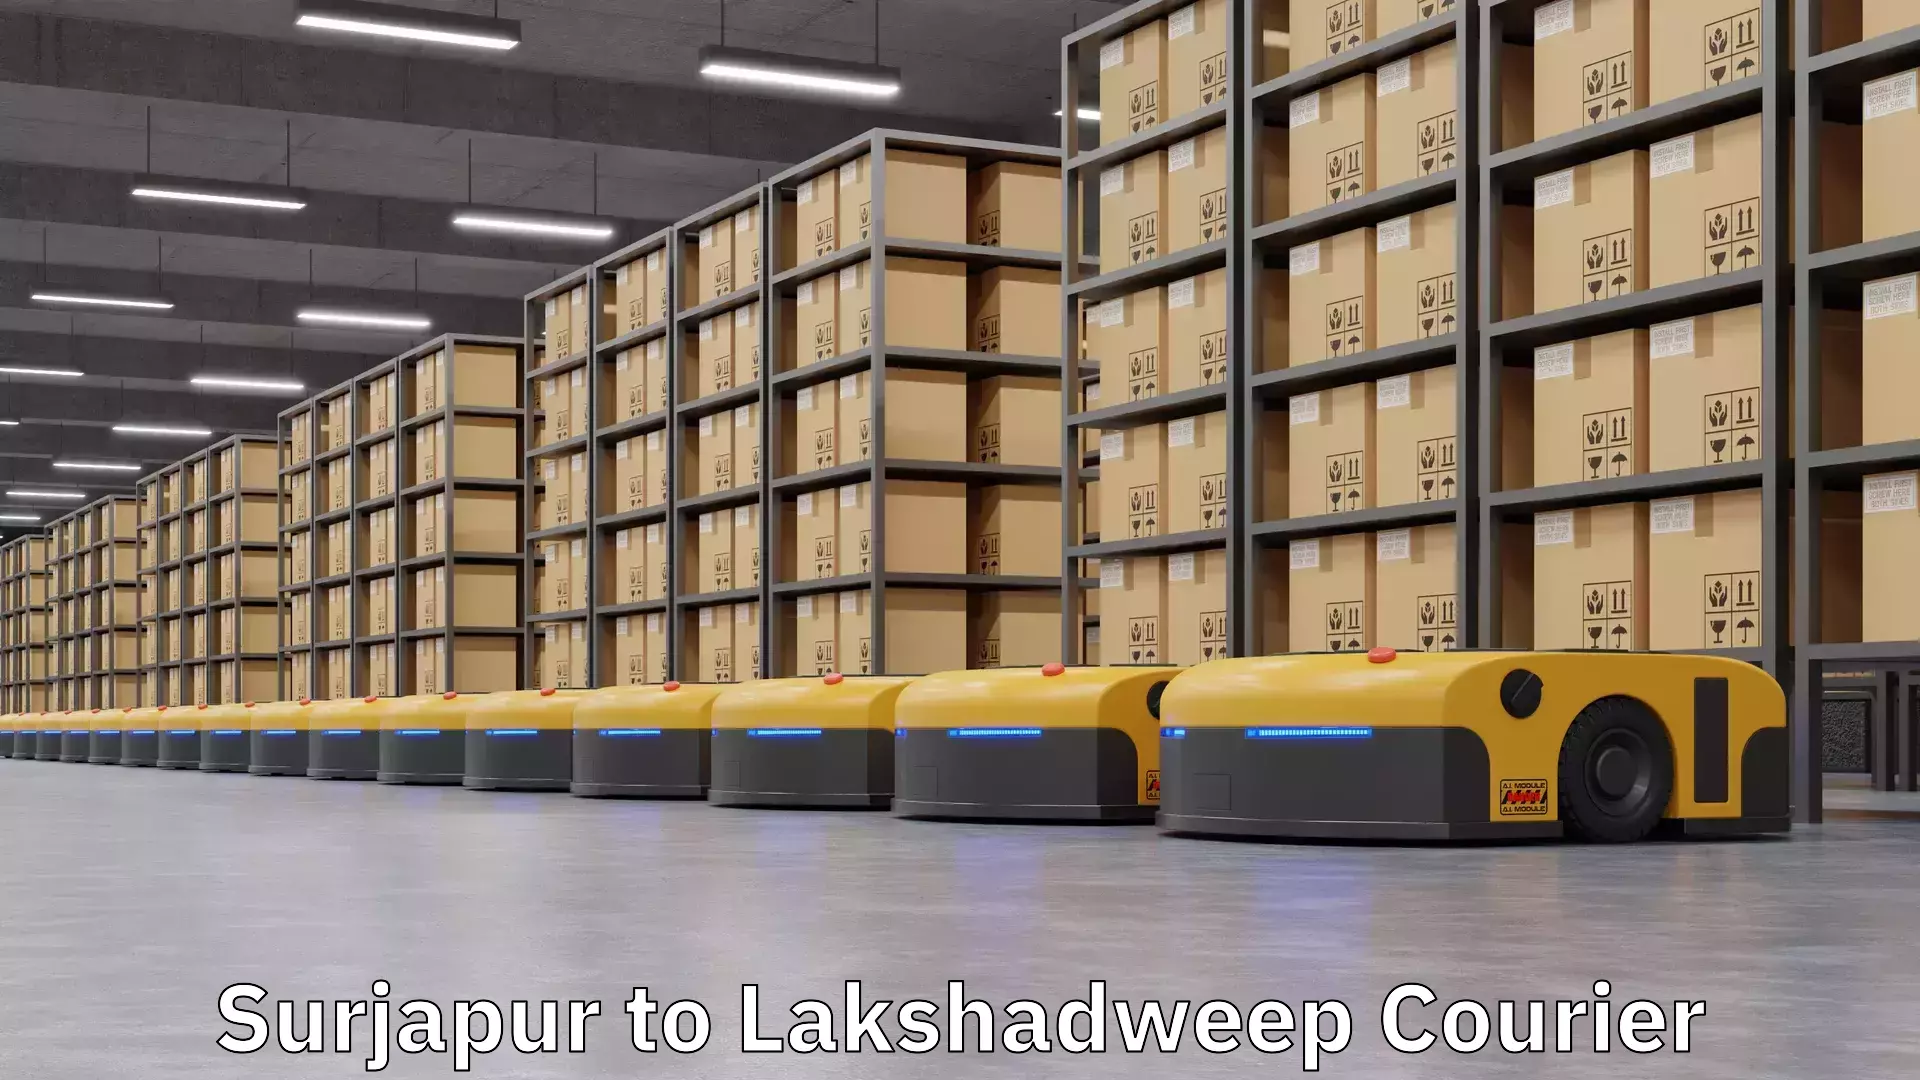 Express logistics providers Surjapur to Lakshadweep